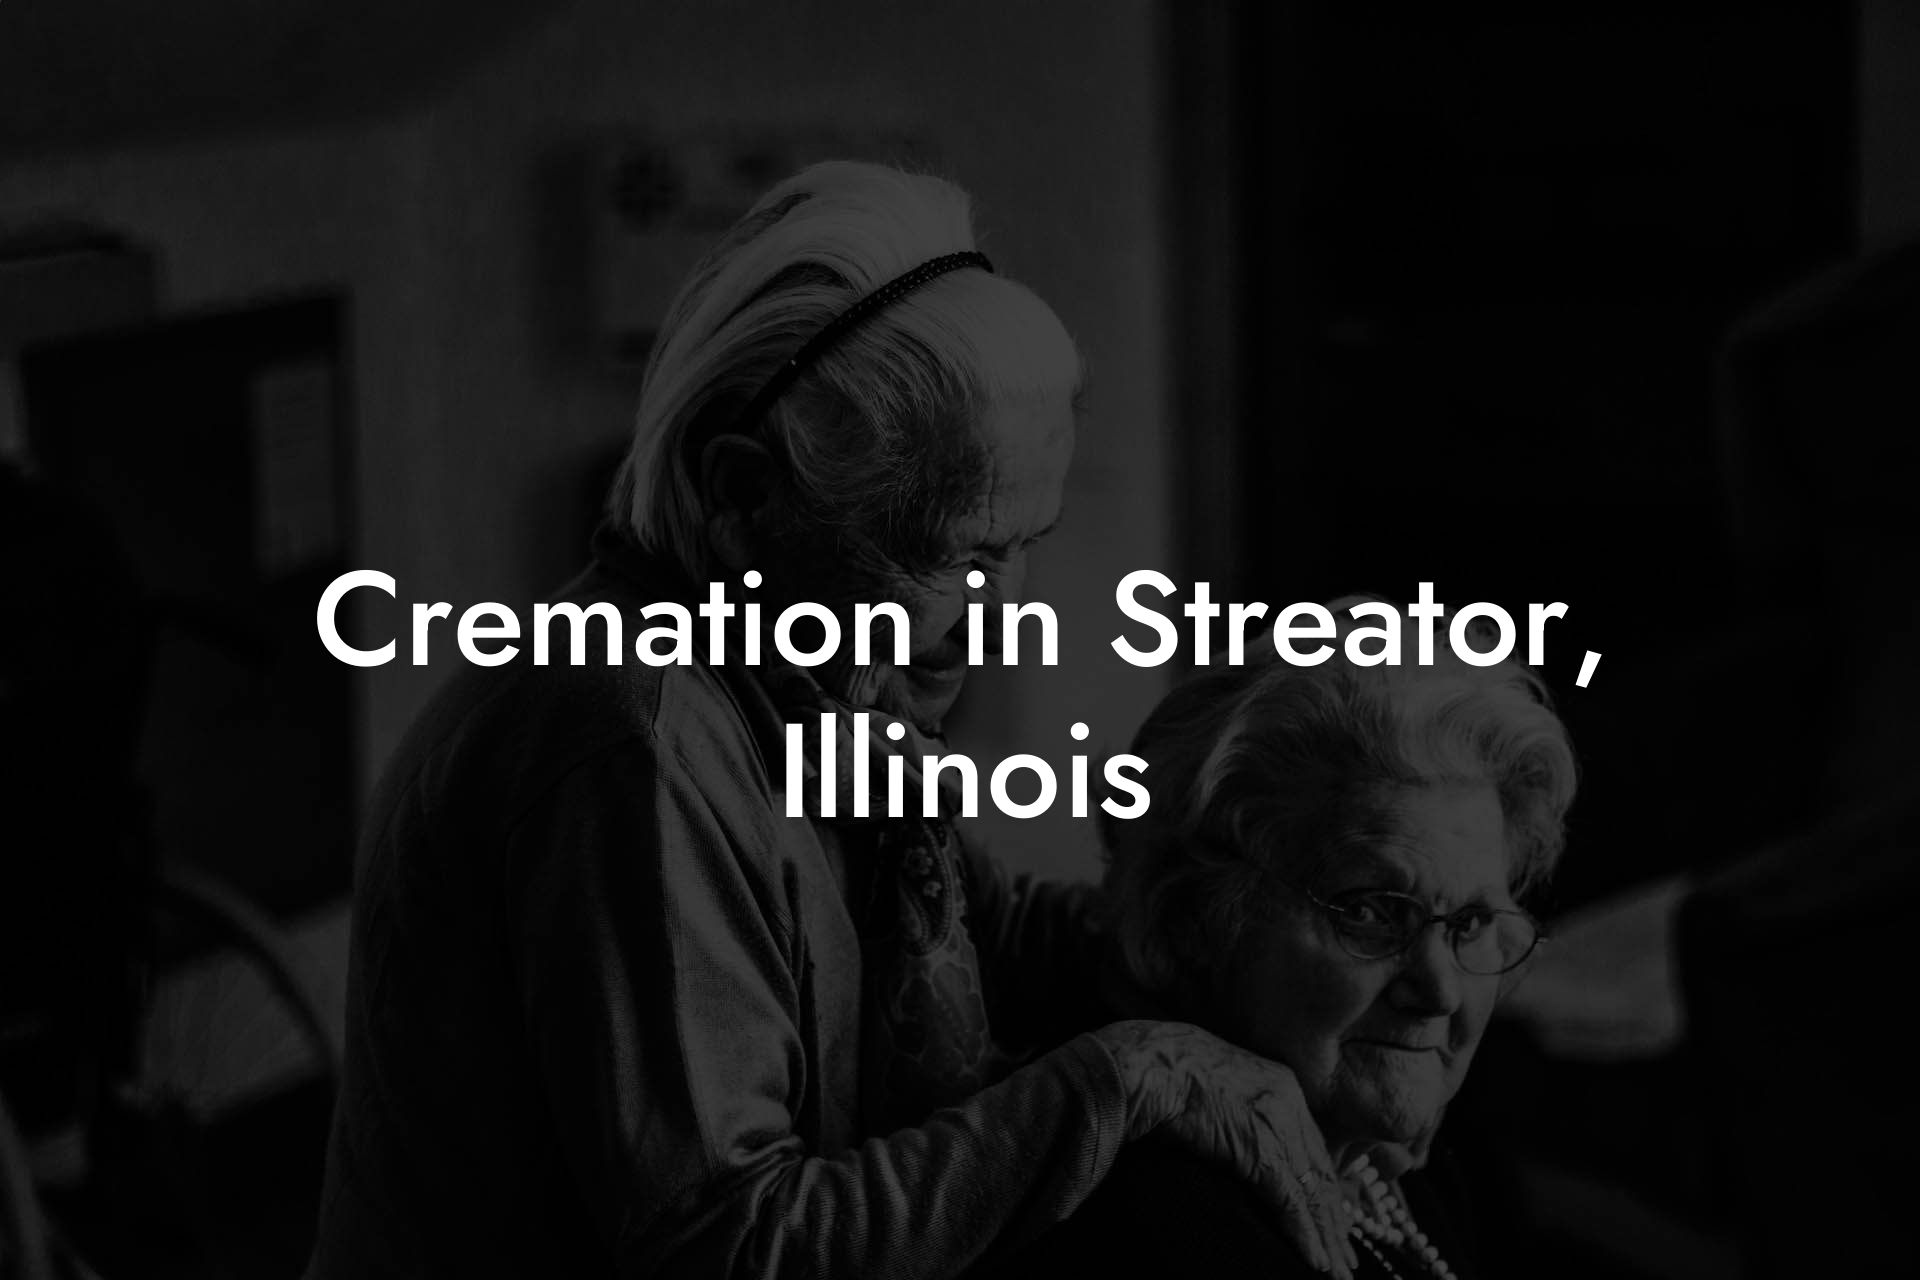 Cremation in Streator, Illinois